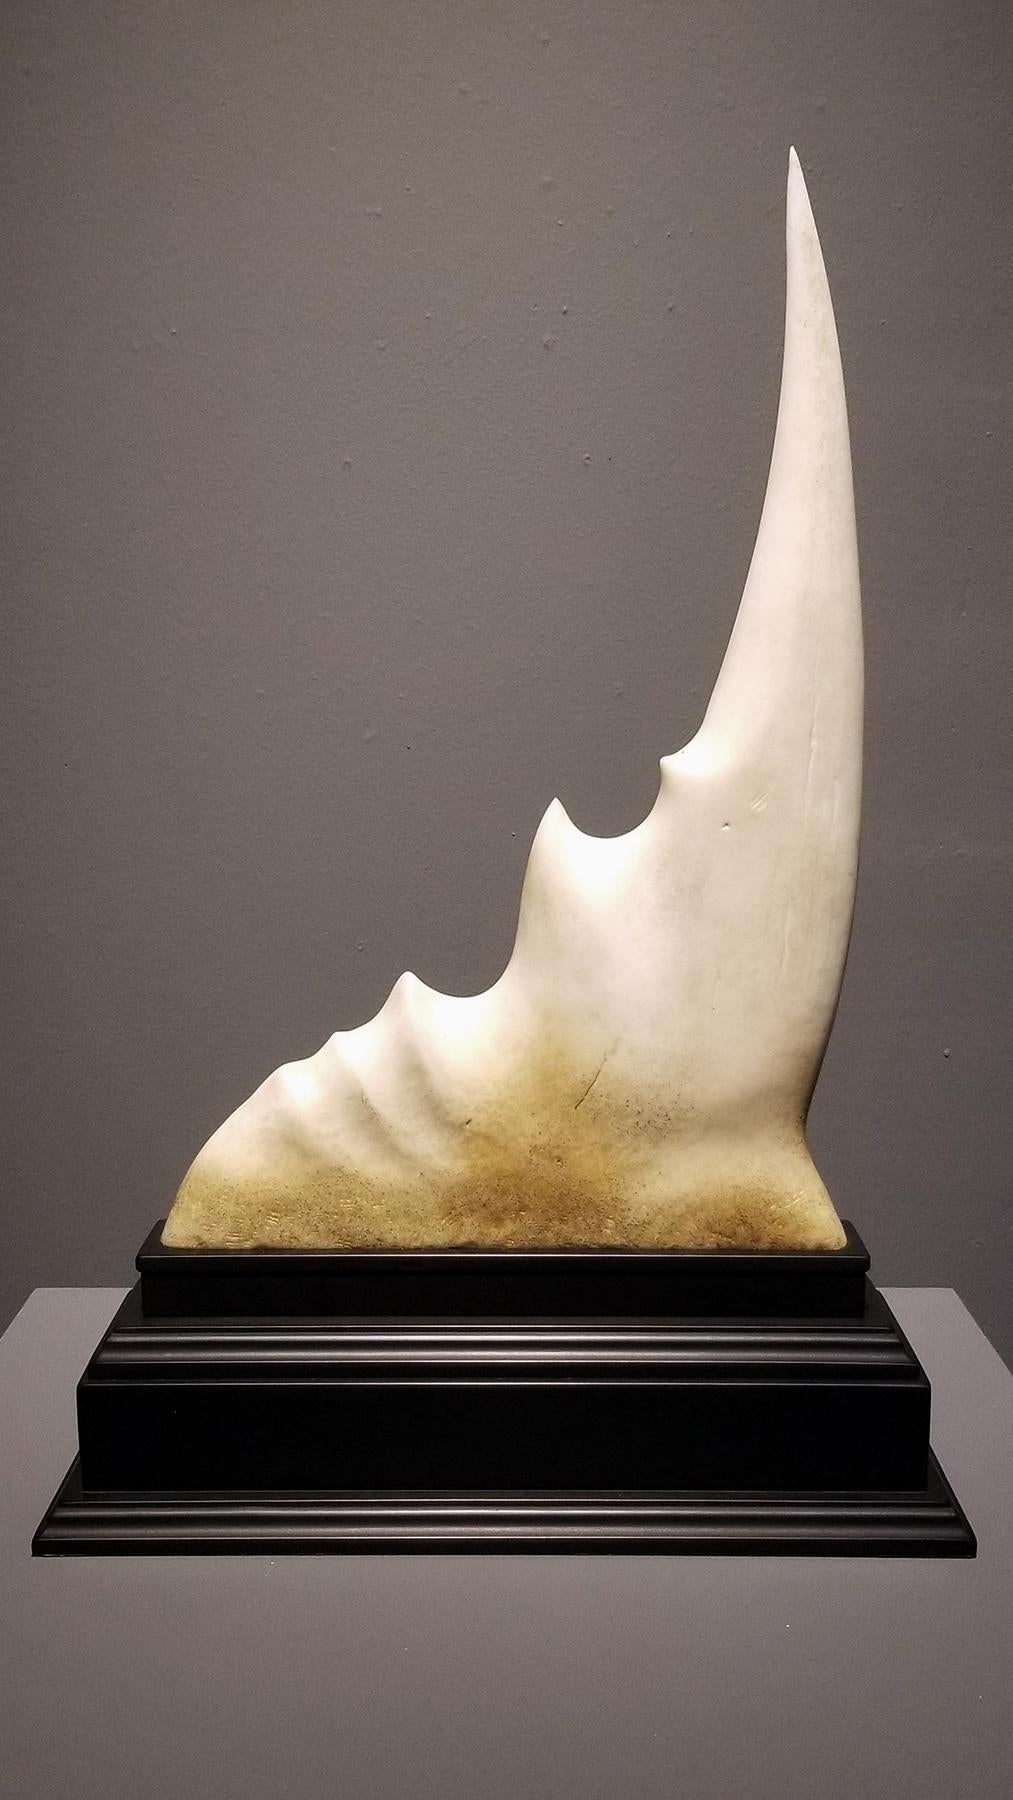 Tusk of the Solipsisaur by Steve Brudniak, Surreal Assemblage Study